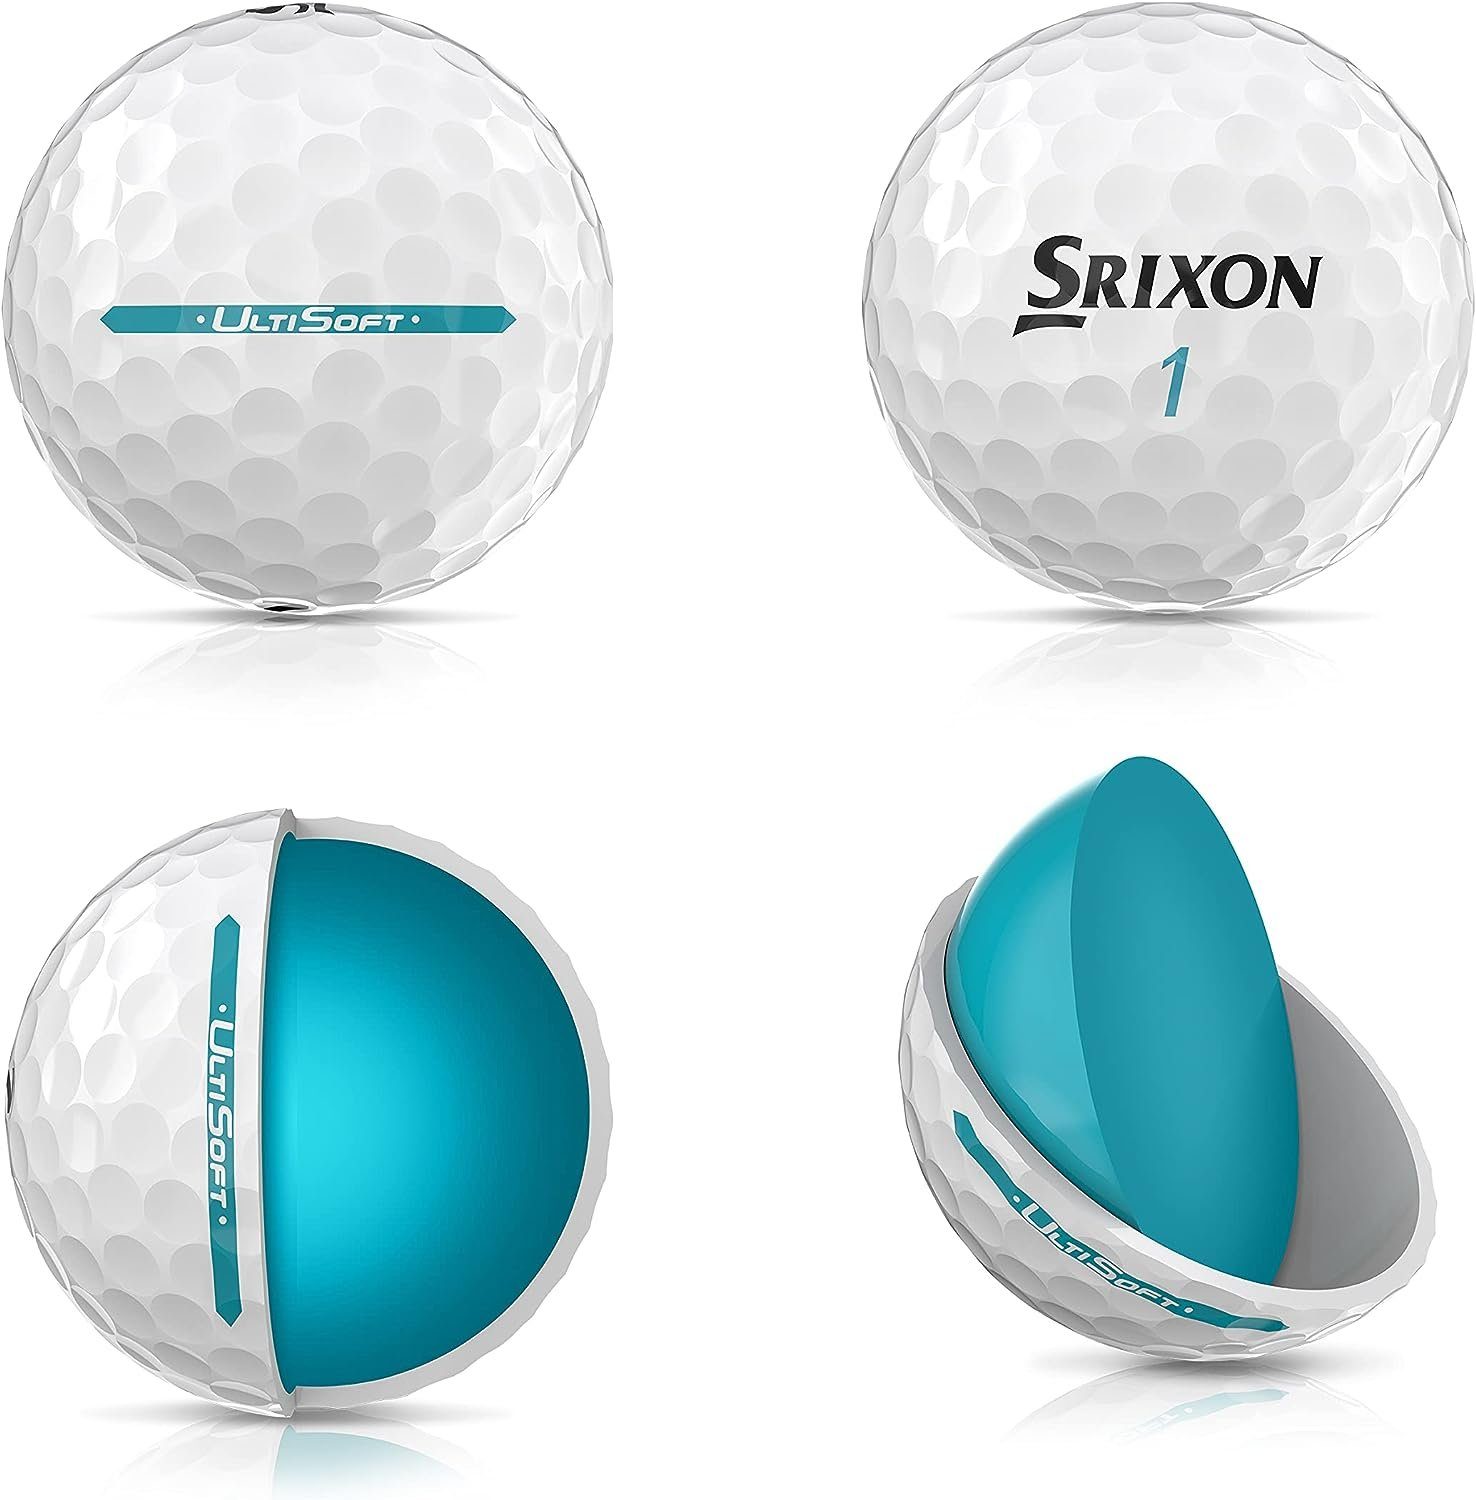 PureWhite Doppelpack Srixon Dutzend Golfball Dutzend) DoppelPack 24, Srixon (2 UltiSoft / Aktion: Golfbälle 2